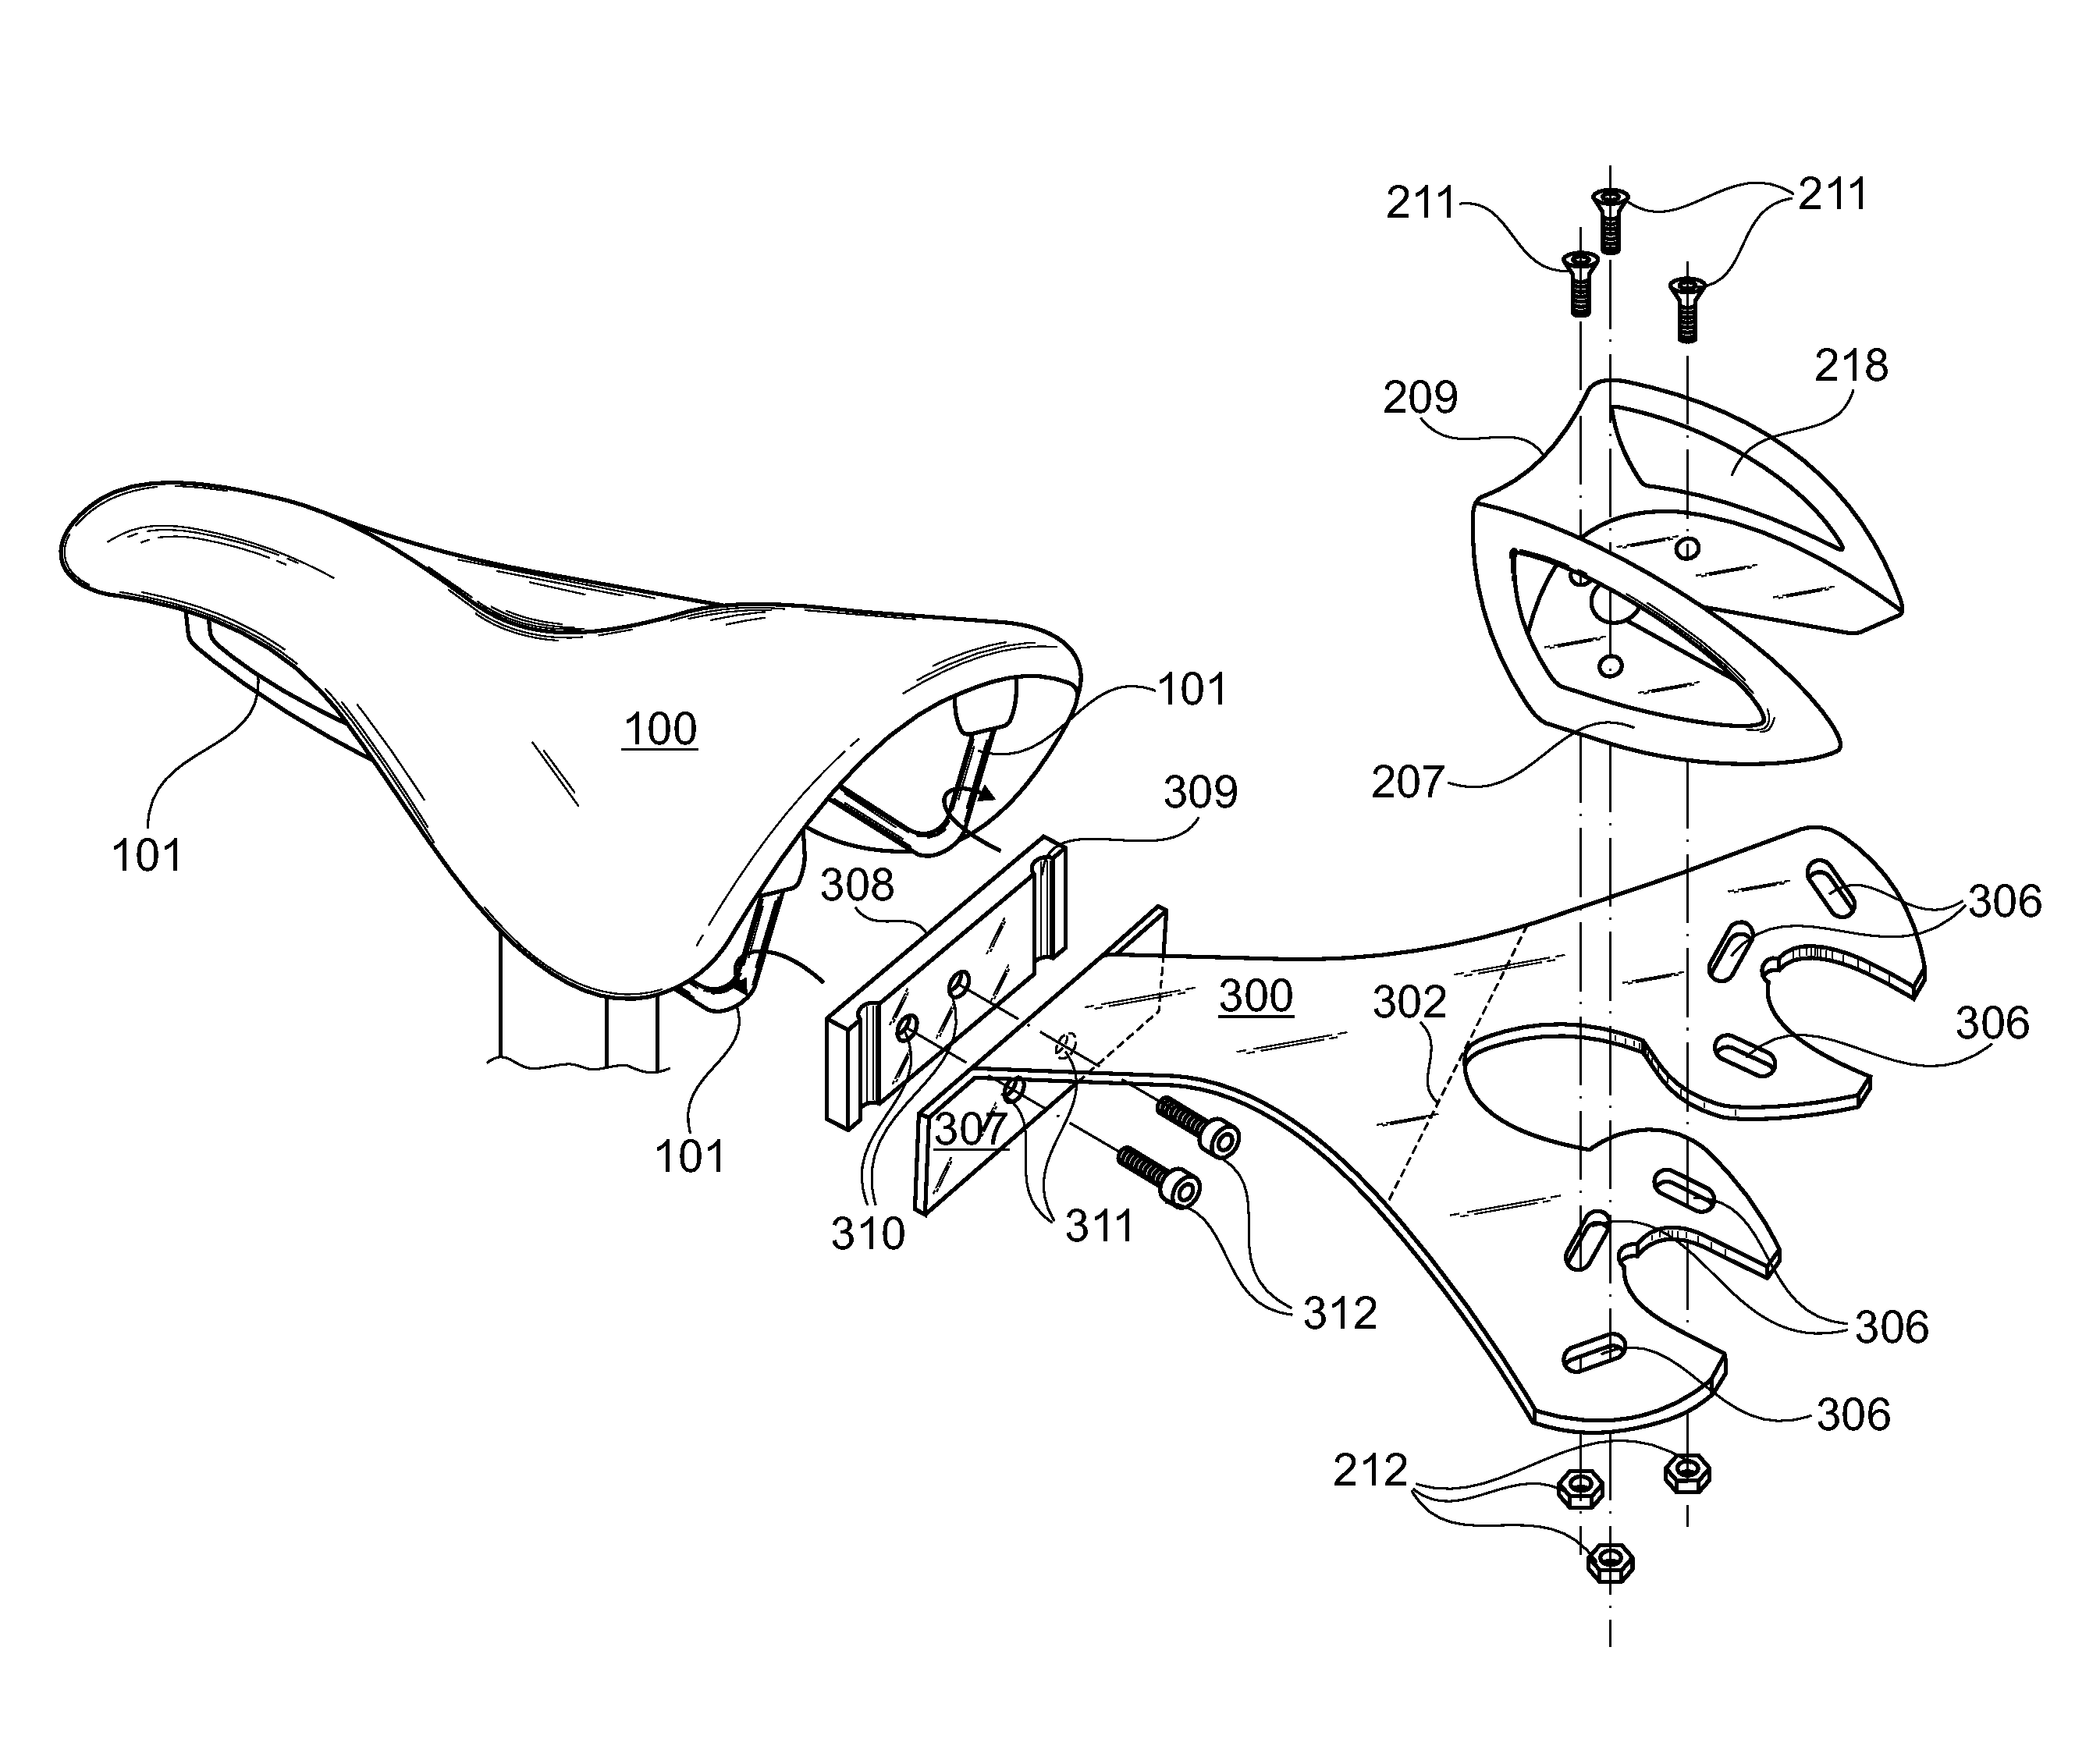 Shoe holder system for bicycle saddle